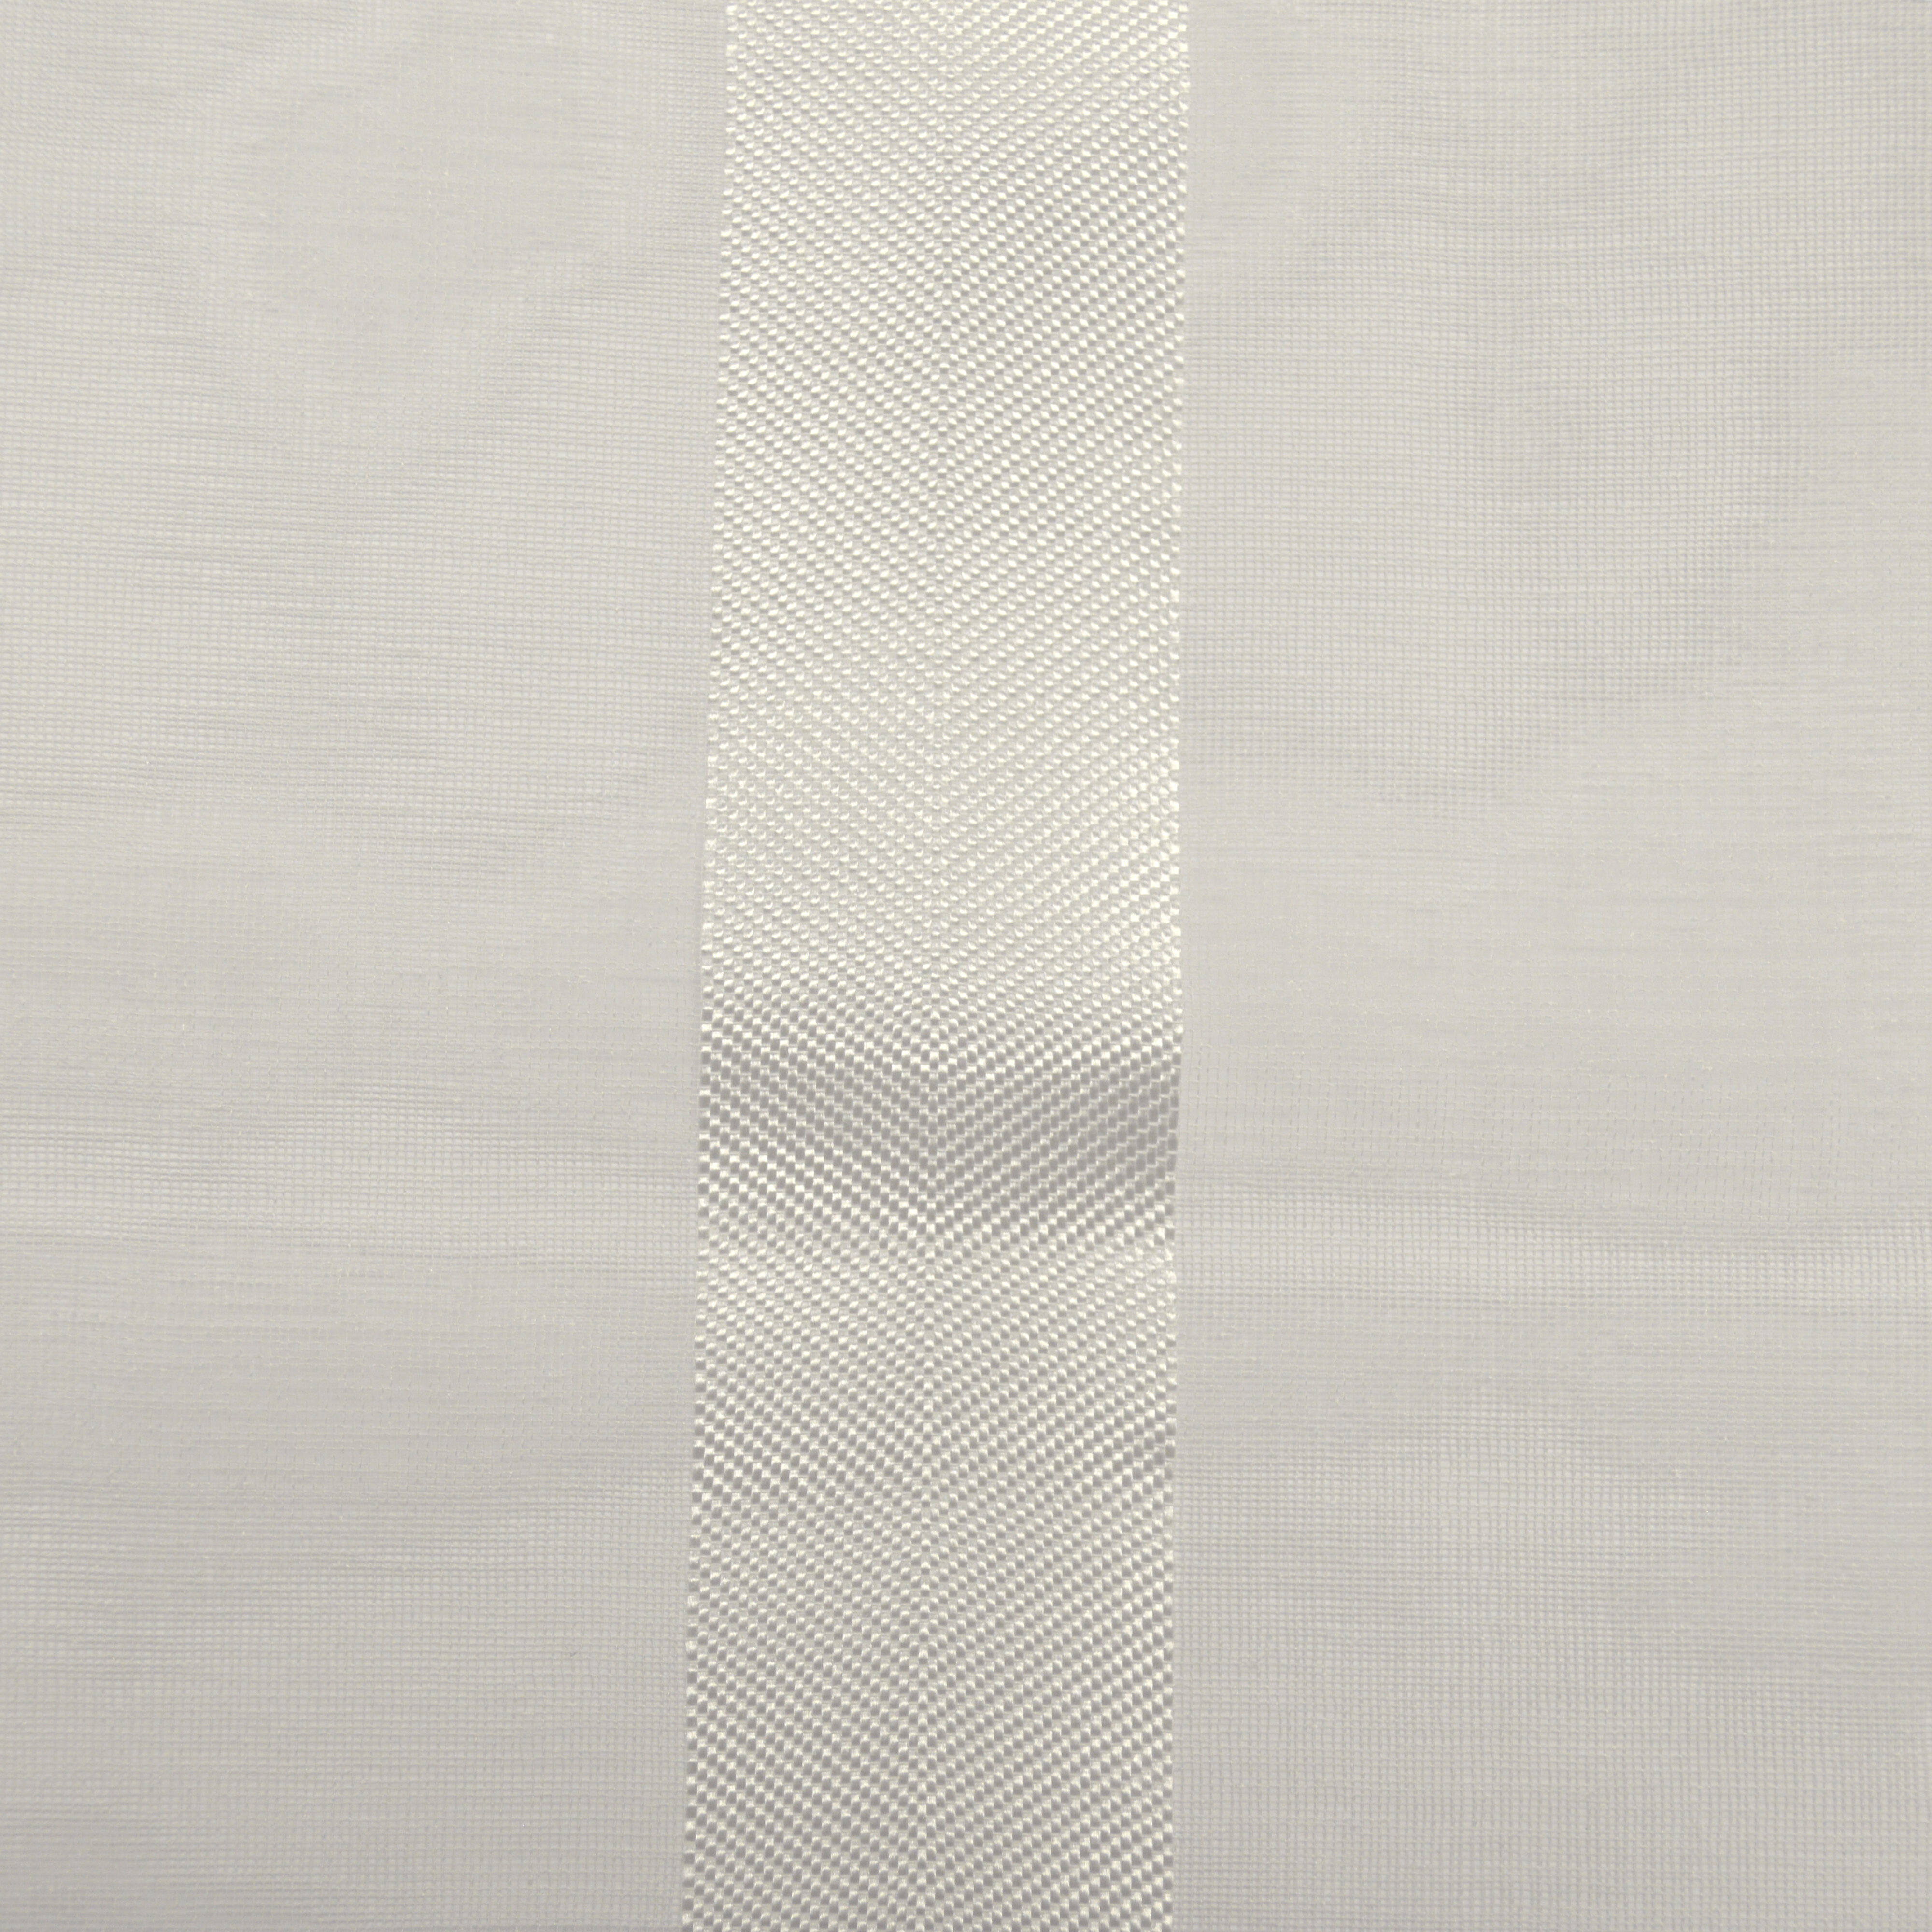 EuropaTex 160 Sheers Striped Fabric | Wayfair